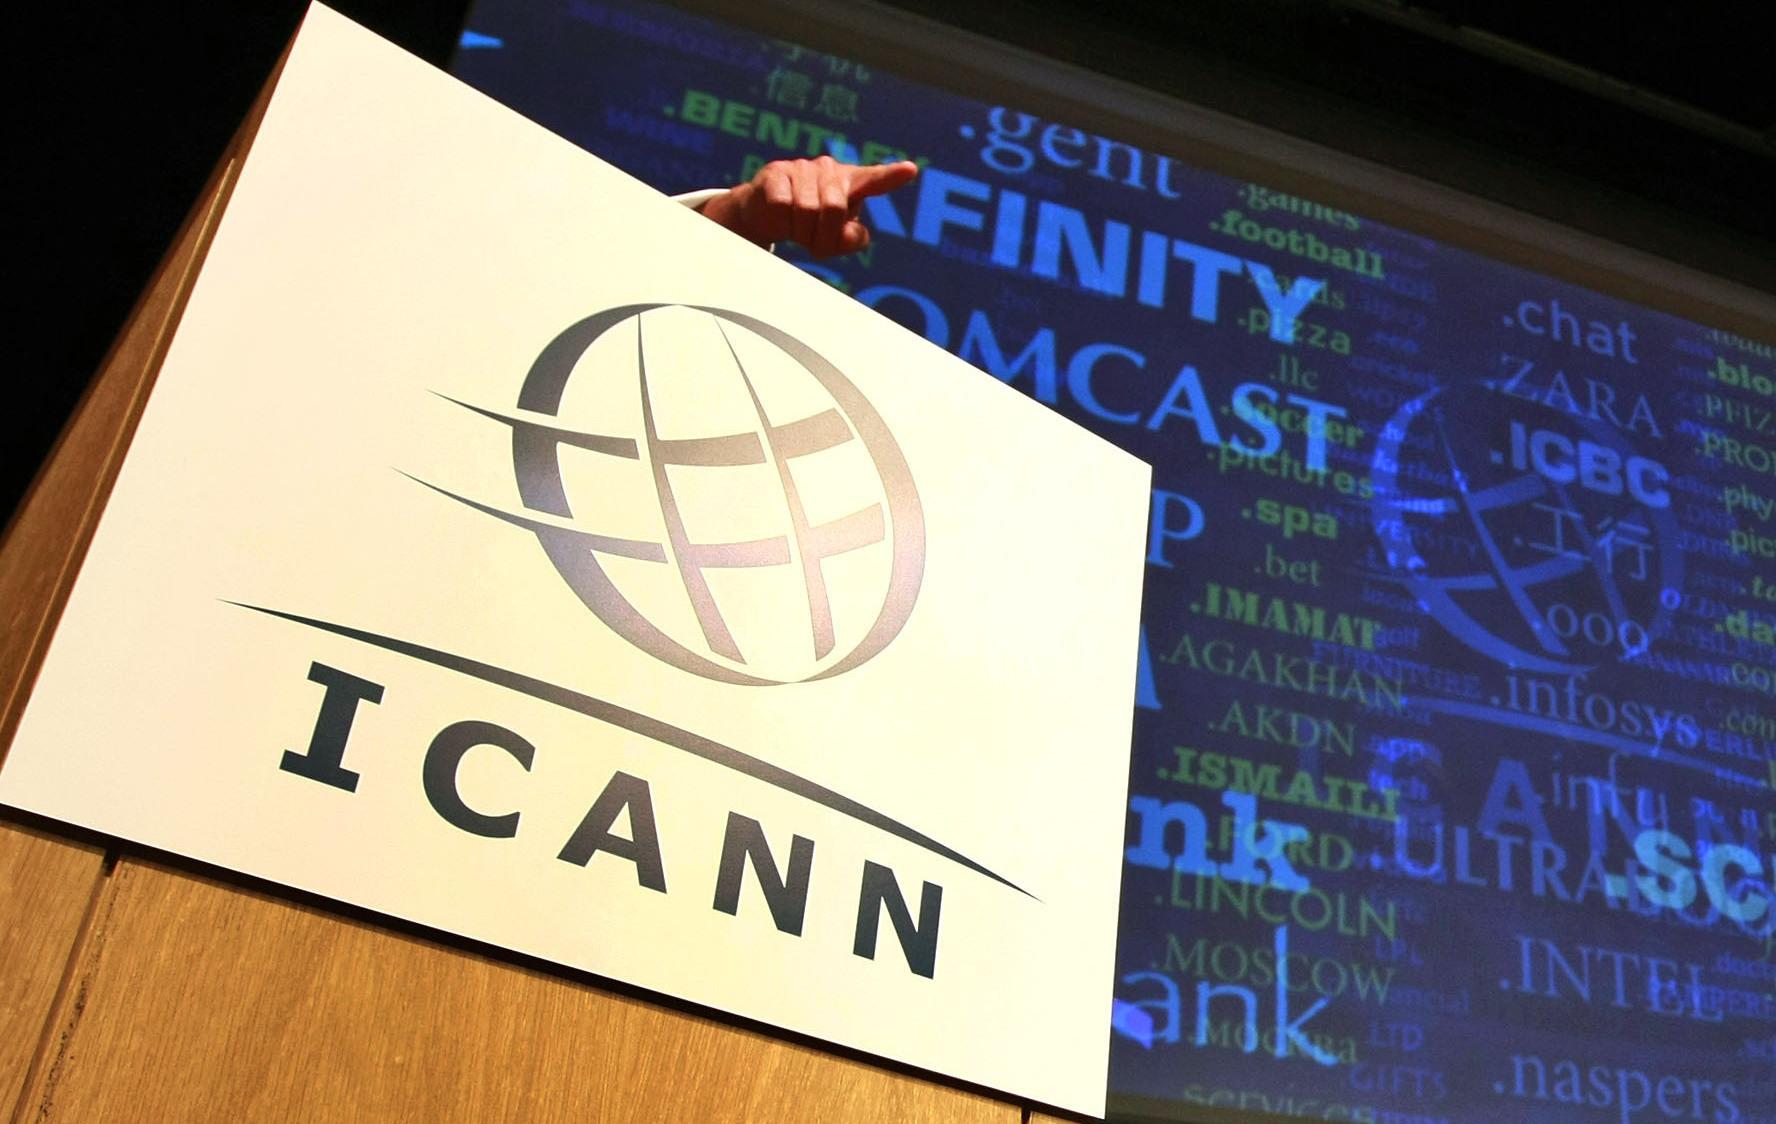 ICANN domains